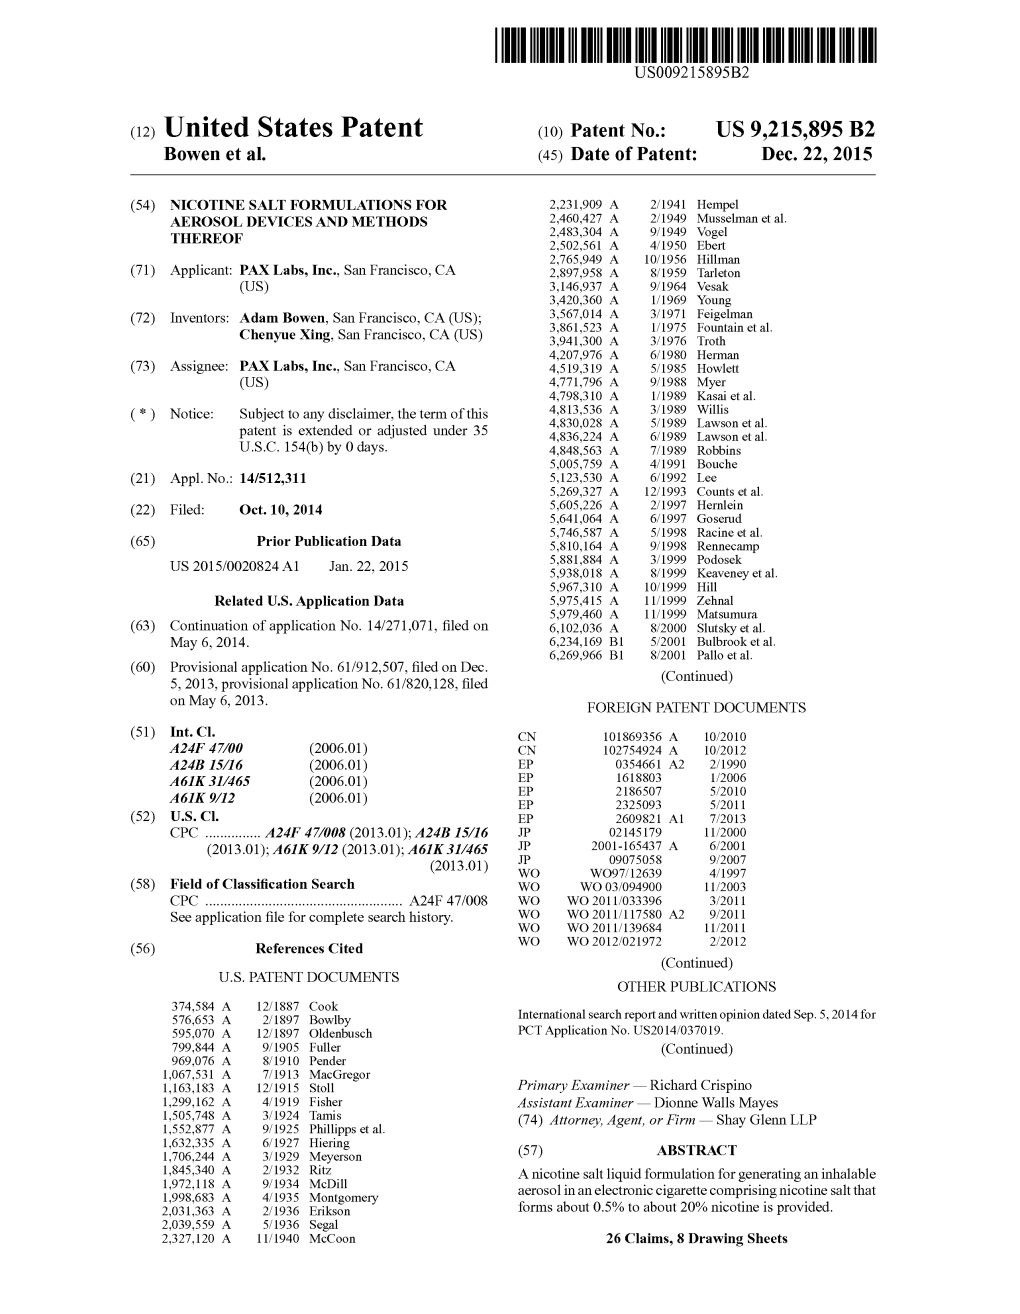 United States Patent No. US 9215895